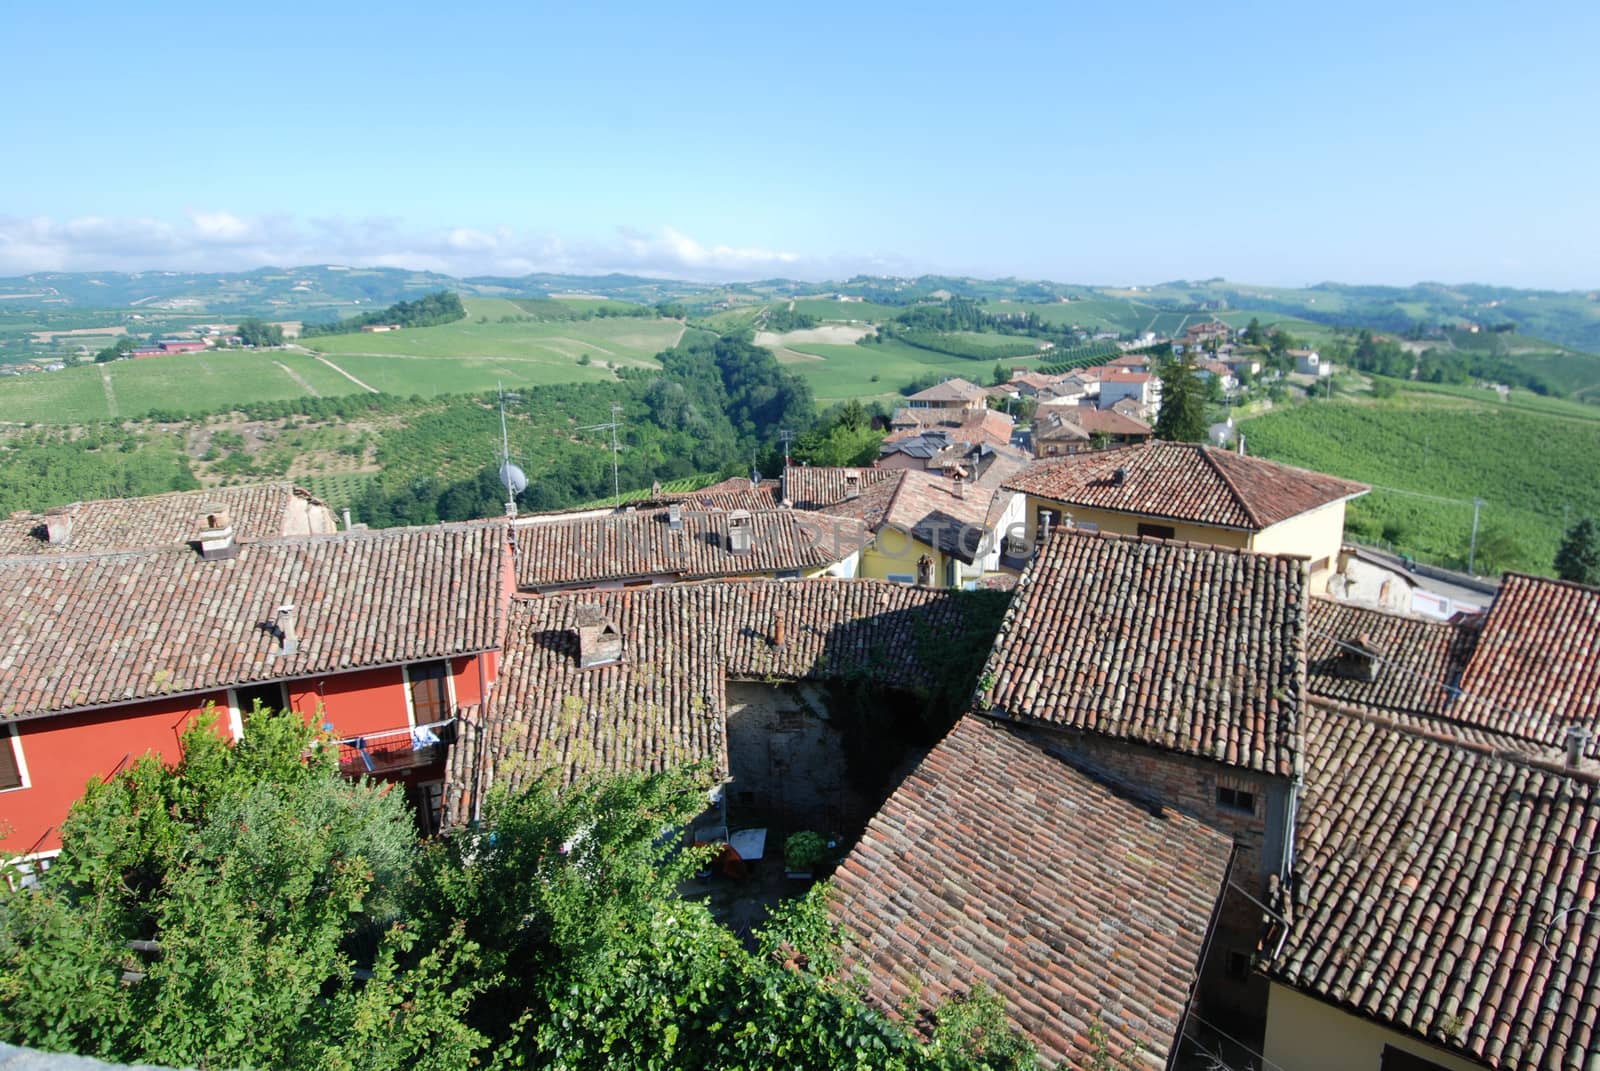 Roofs of Serralunga d'Alba, Piedmont - Italy by cosca